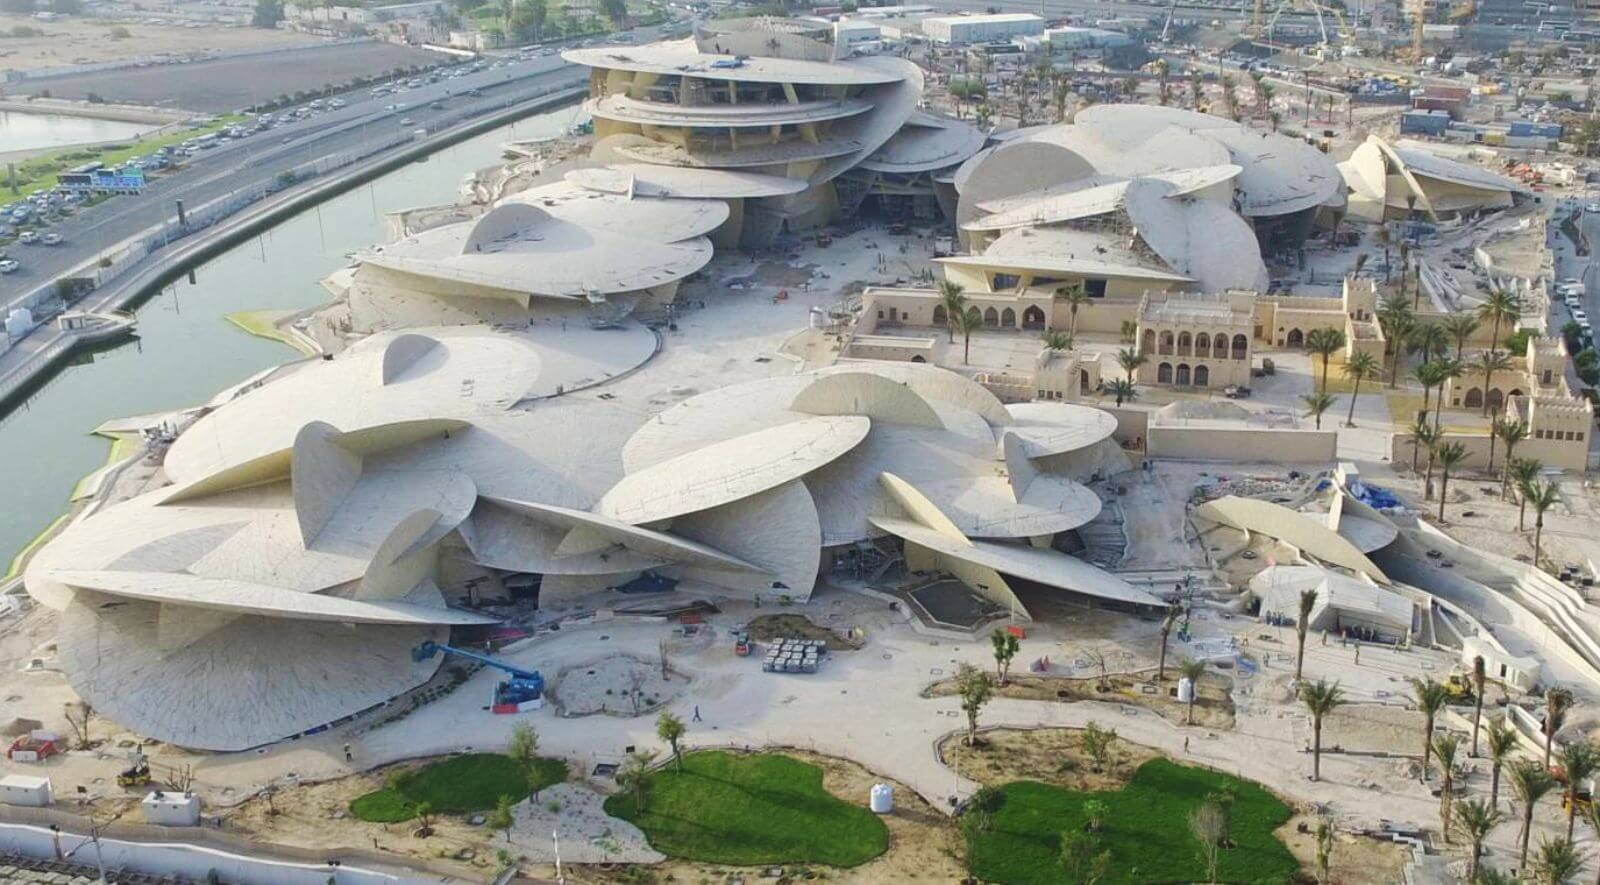 national museum of Qatar